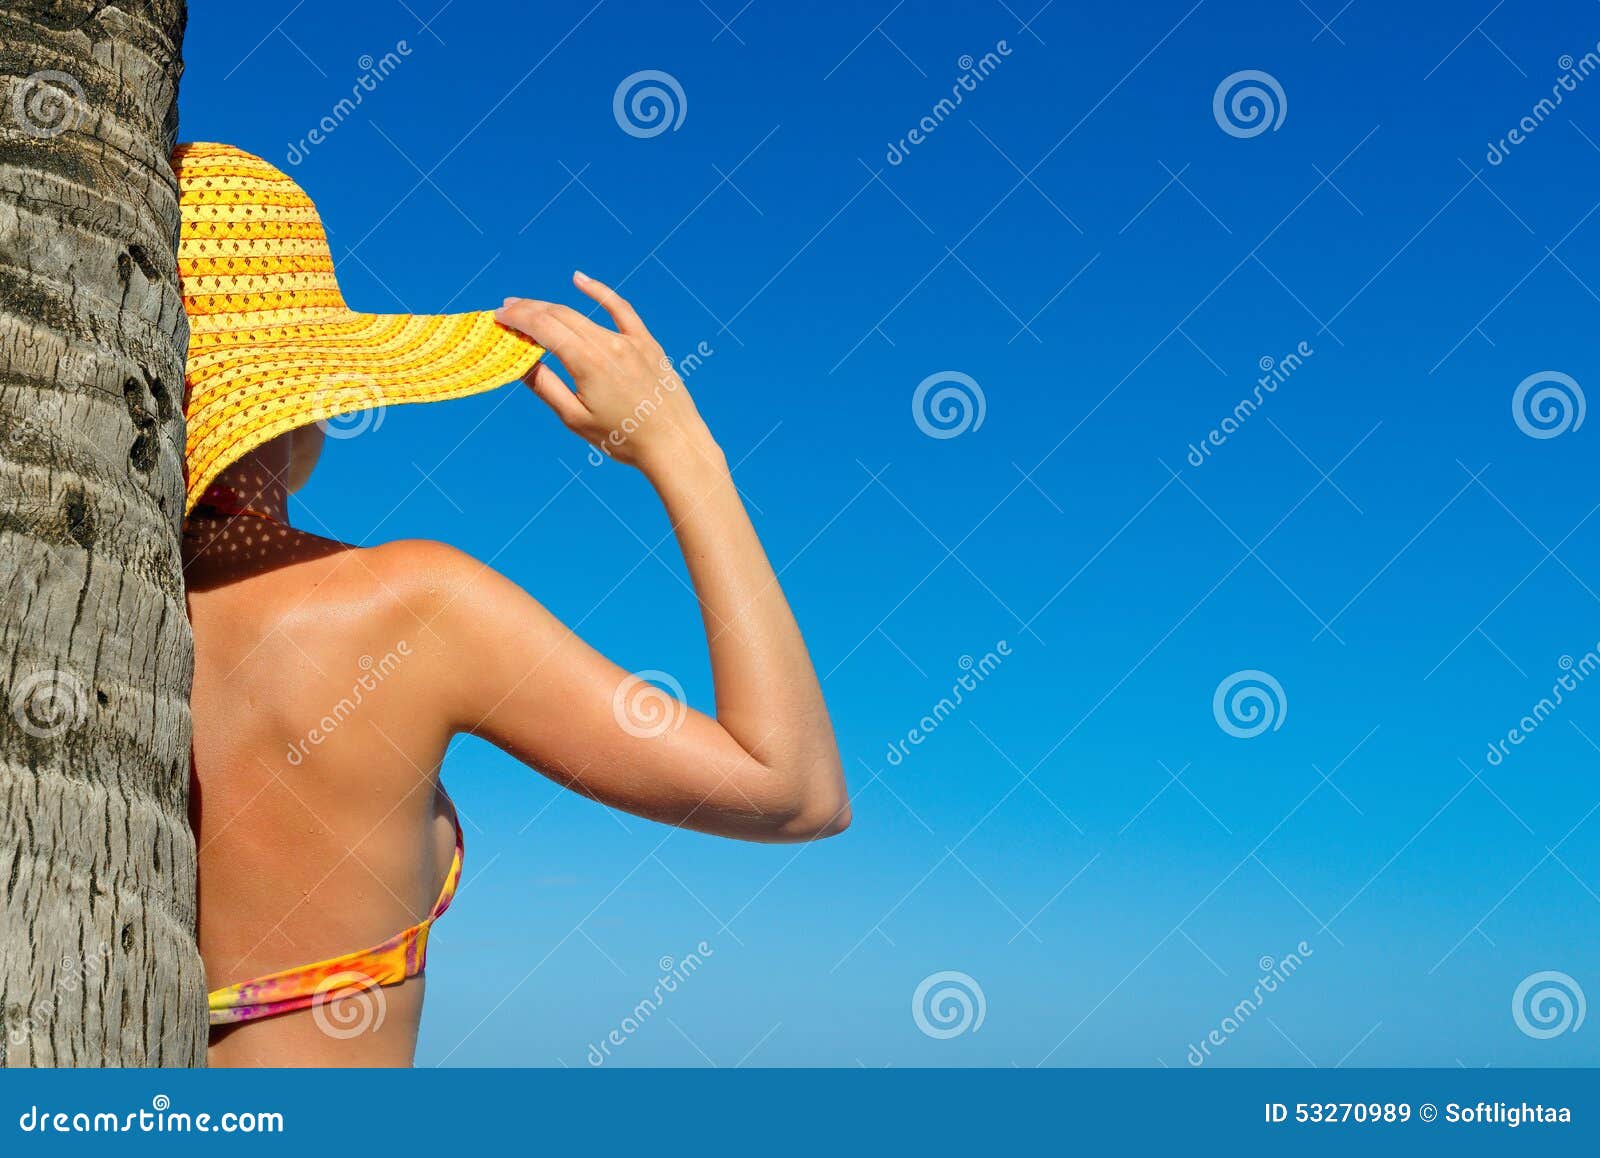 beautiful woman in bikini and sunhat standing with hands raised